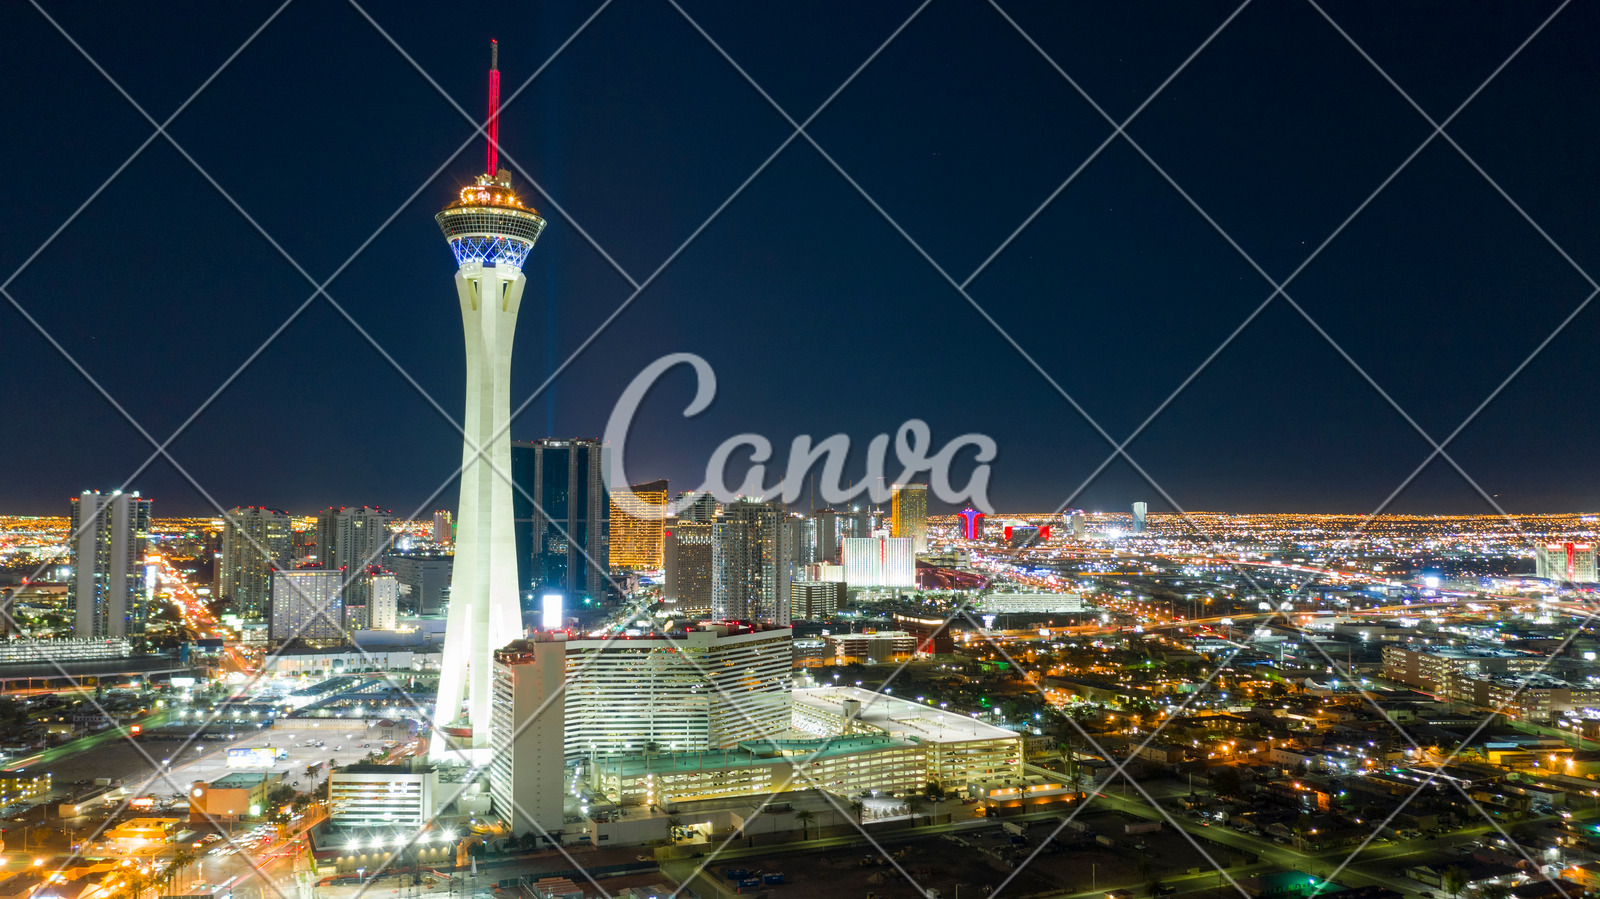 File:Las Vegas 89.jpg - Wikipedia